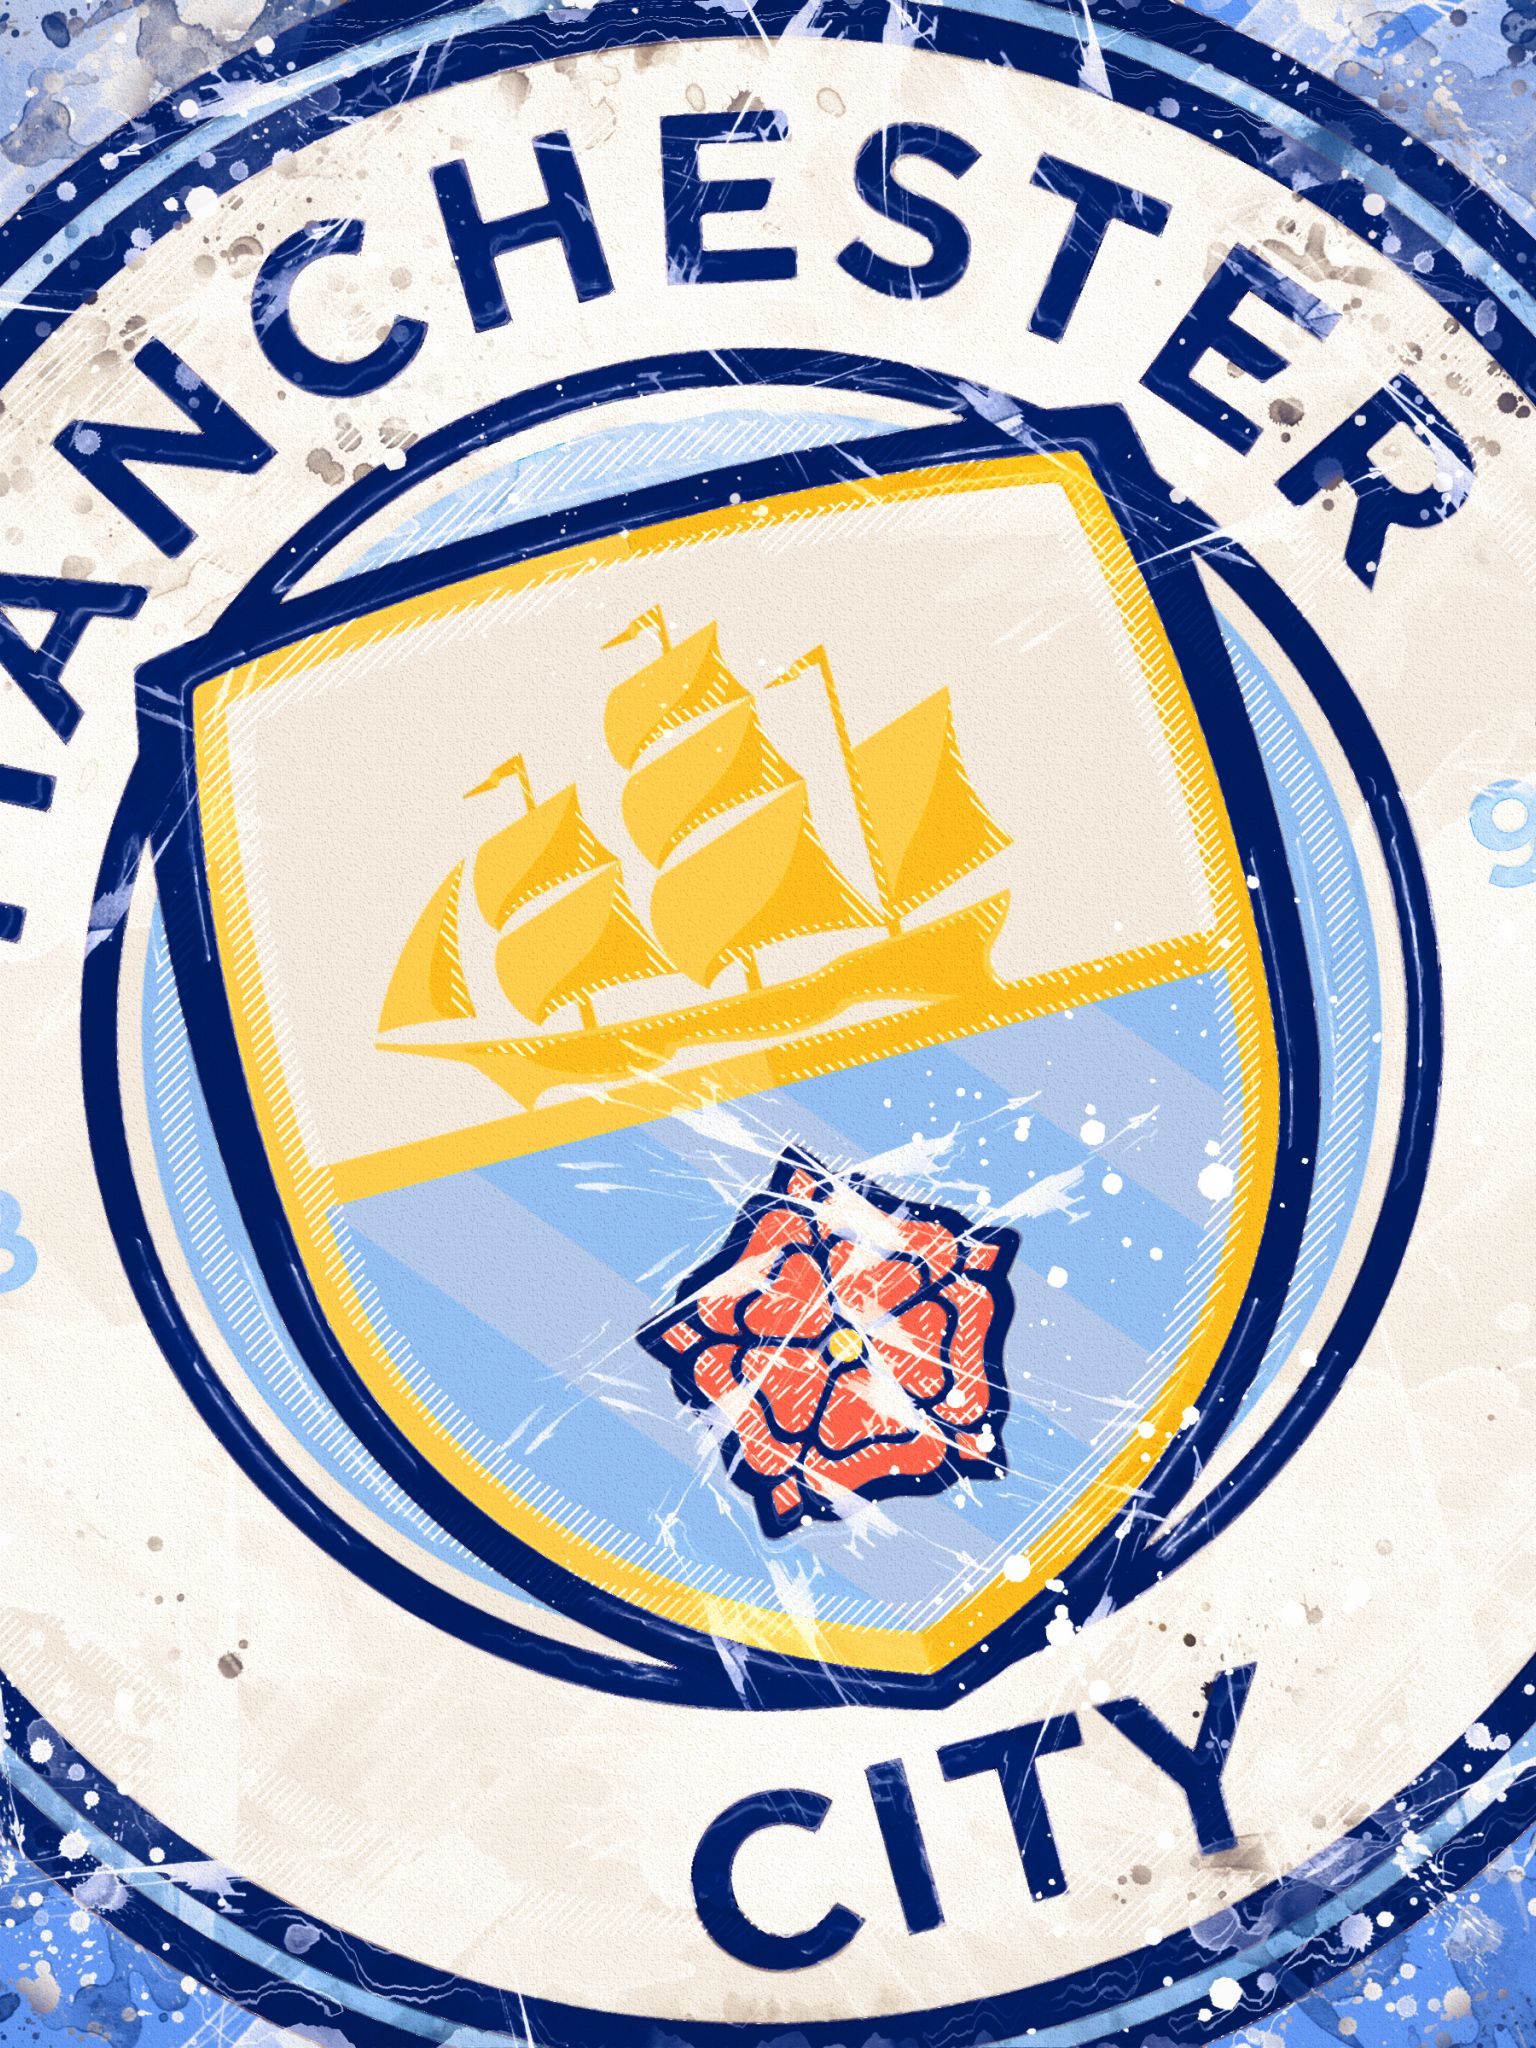 Manchester City Logos Wallpaper .wallpaperafari.com